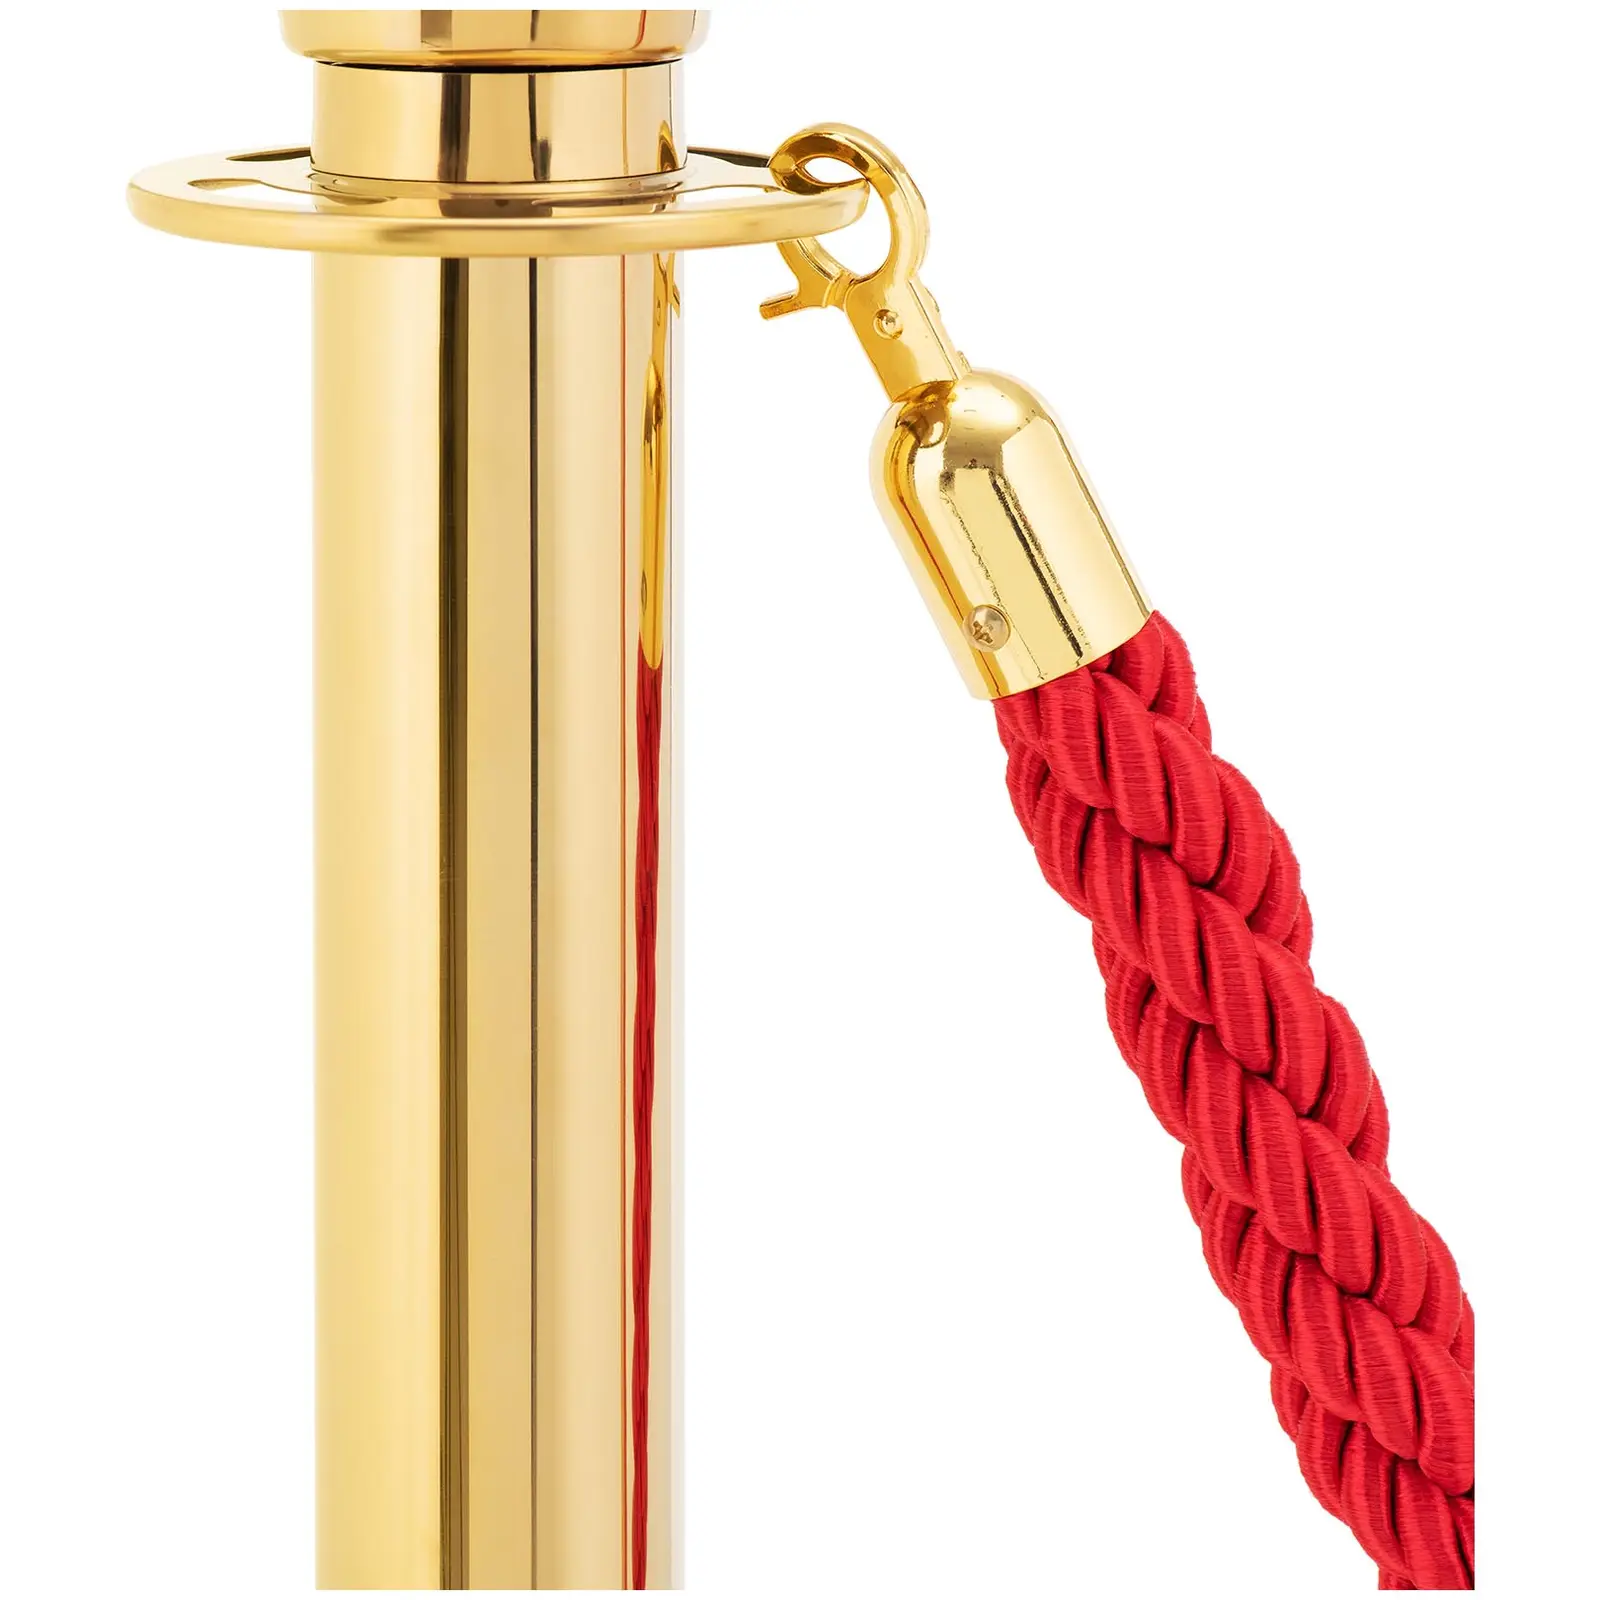 2 postes separadores com corda - 150 cm - cor dourada